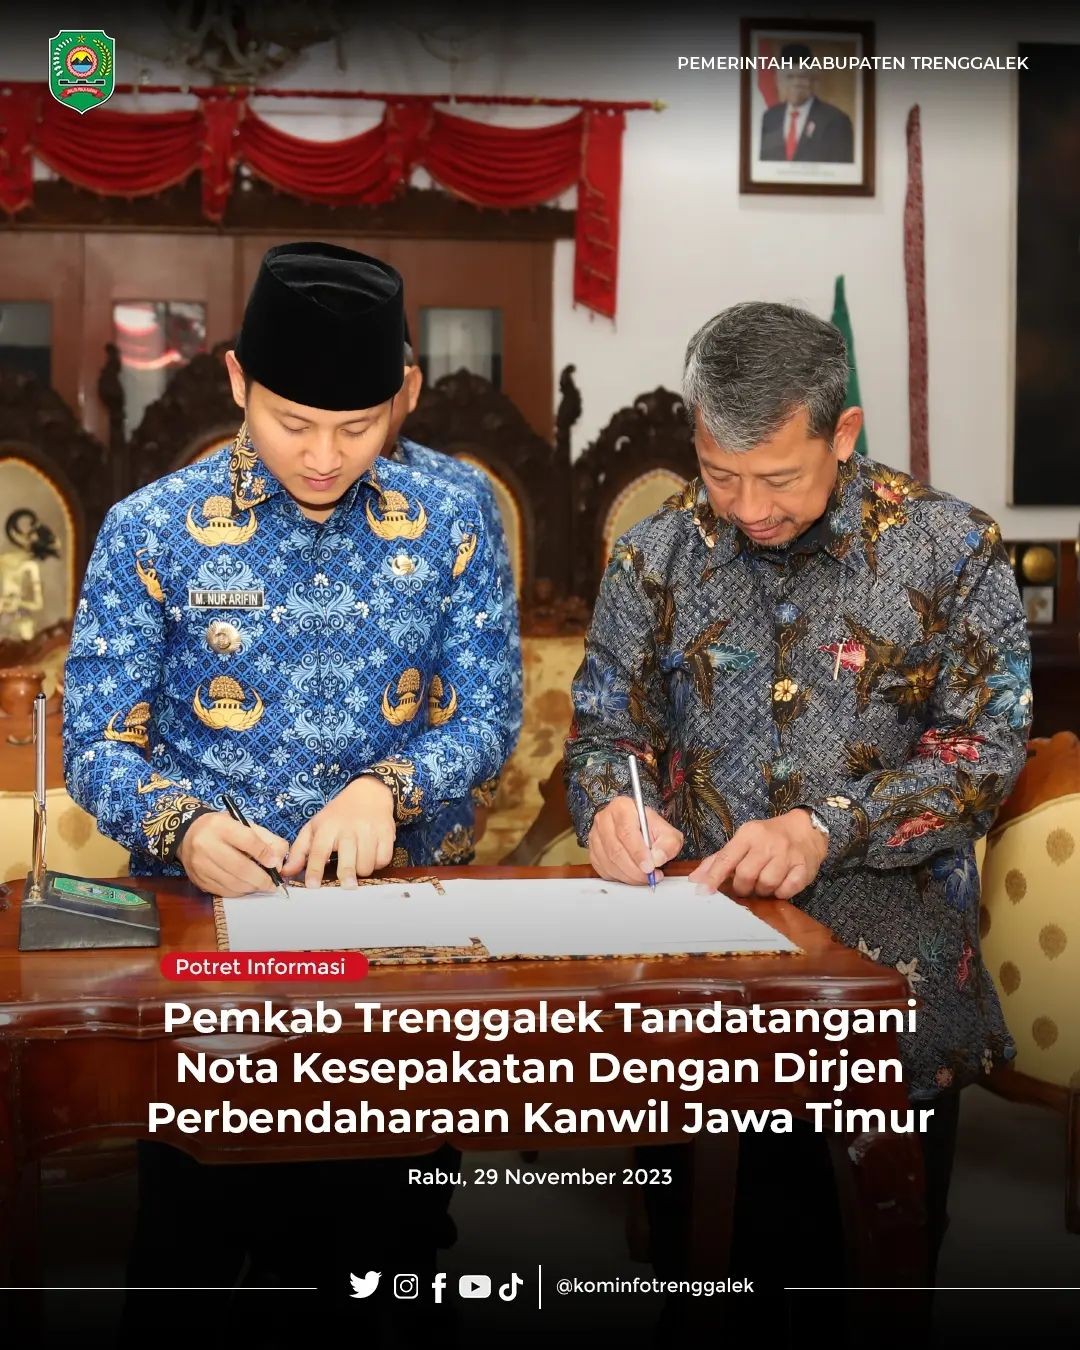 Pemkab Trenggalek Tandatangani Nota Kesepakatan Dengan Dirjen Perbendaharaan Kanwil Jawa Timur